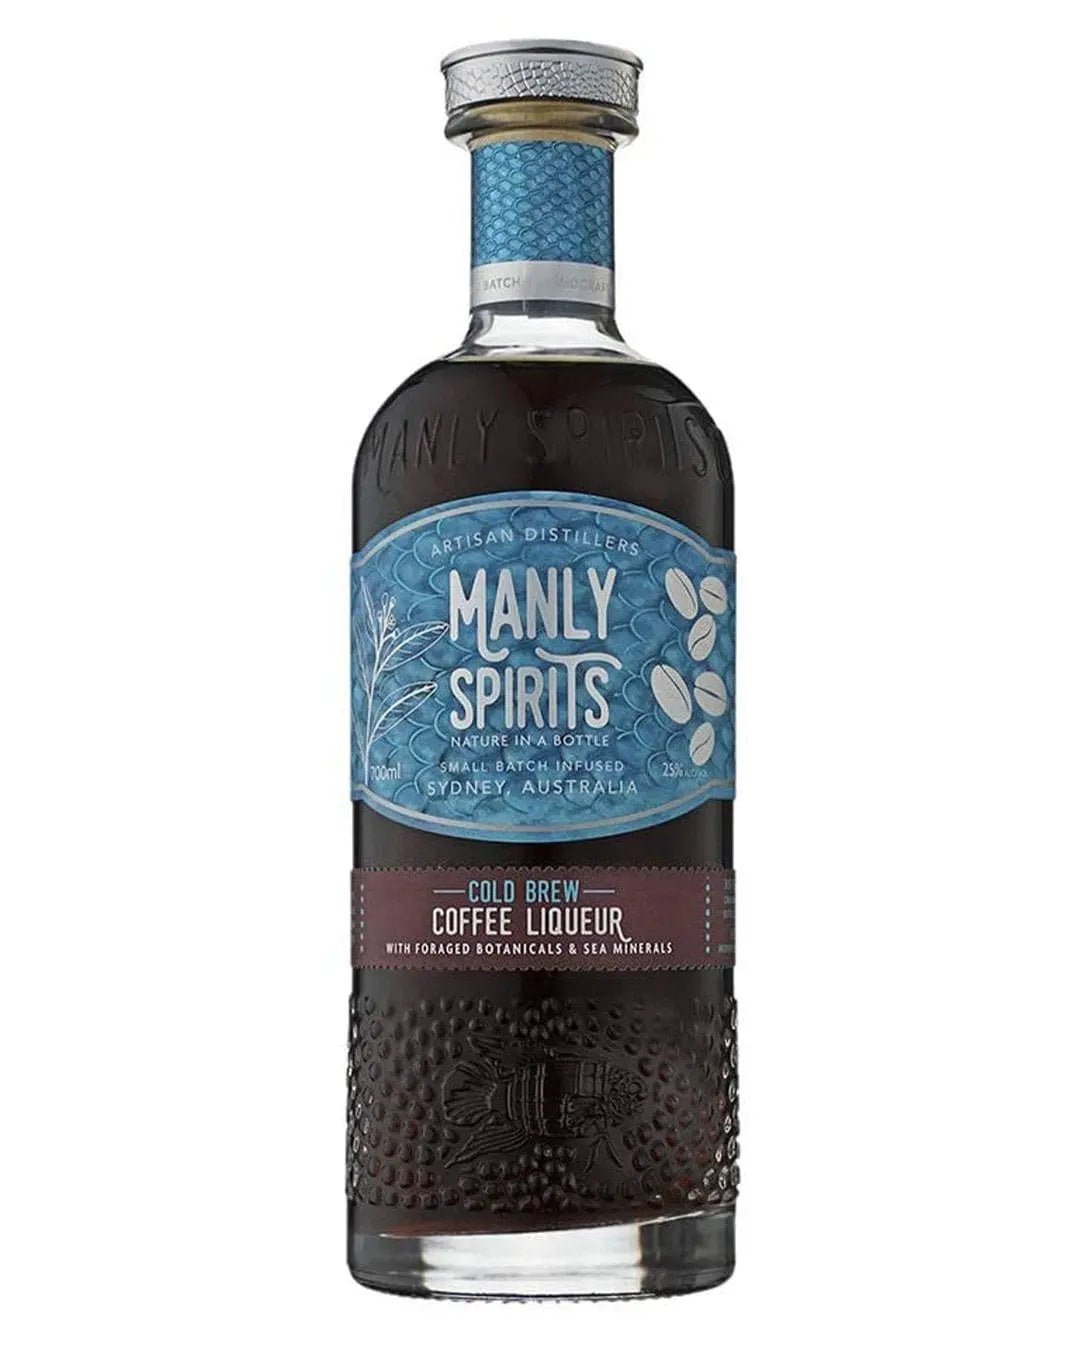 Manly Spirits Co. BlackFin Cold Brew Coffee Liqueur, 70 cl Liqueurs & Other Spirits 9353927000044